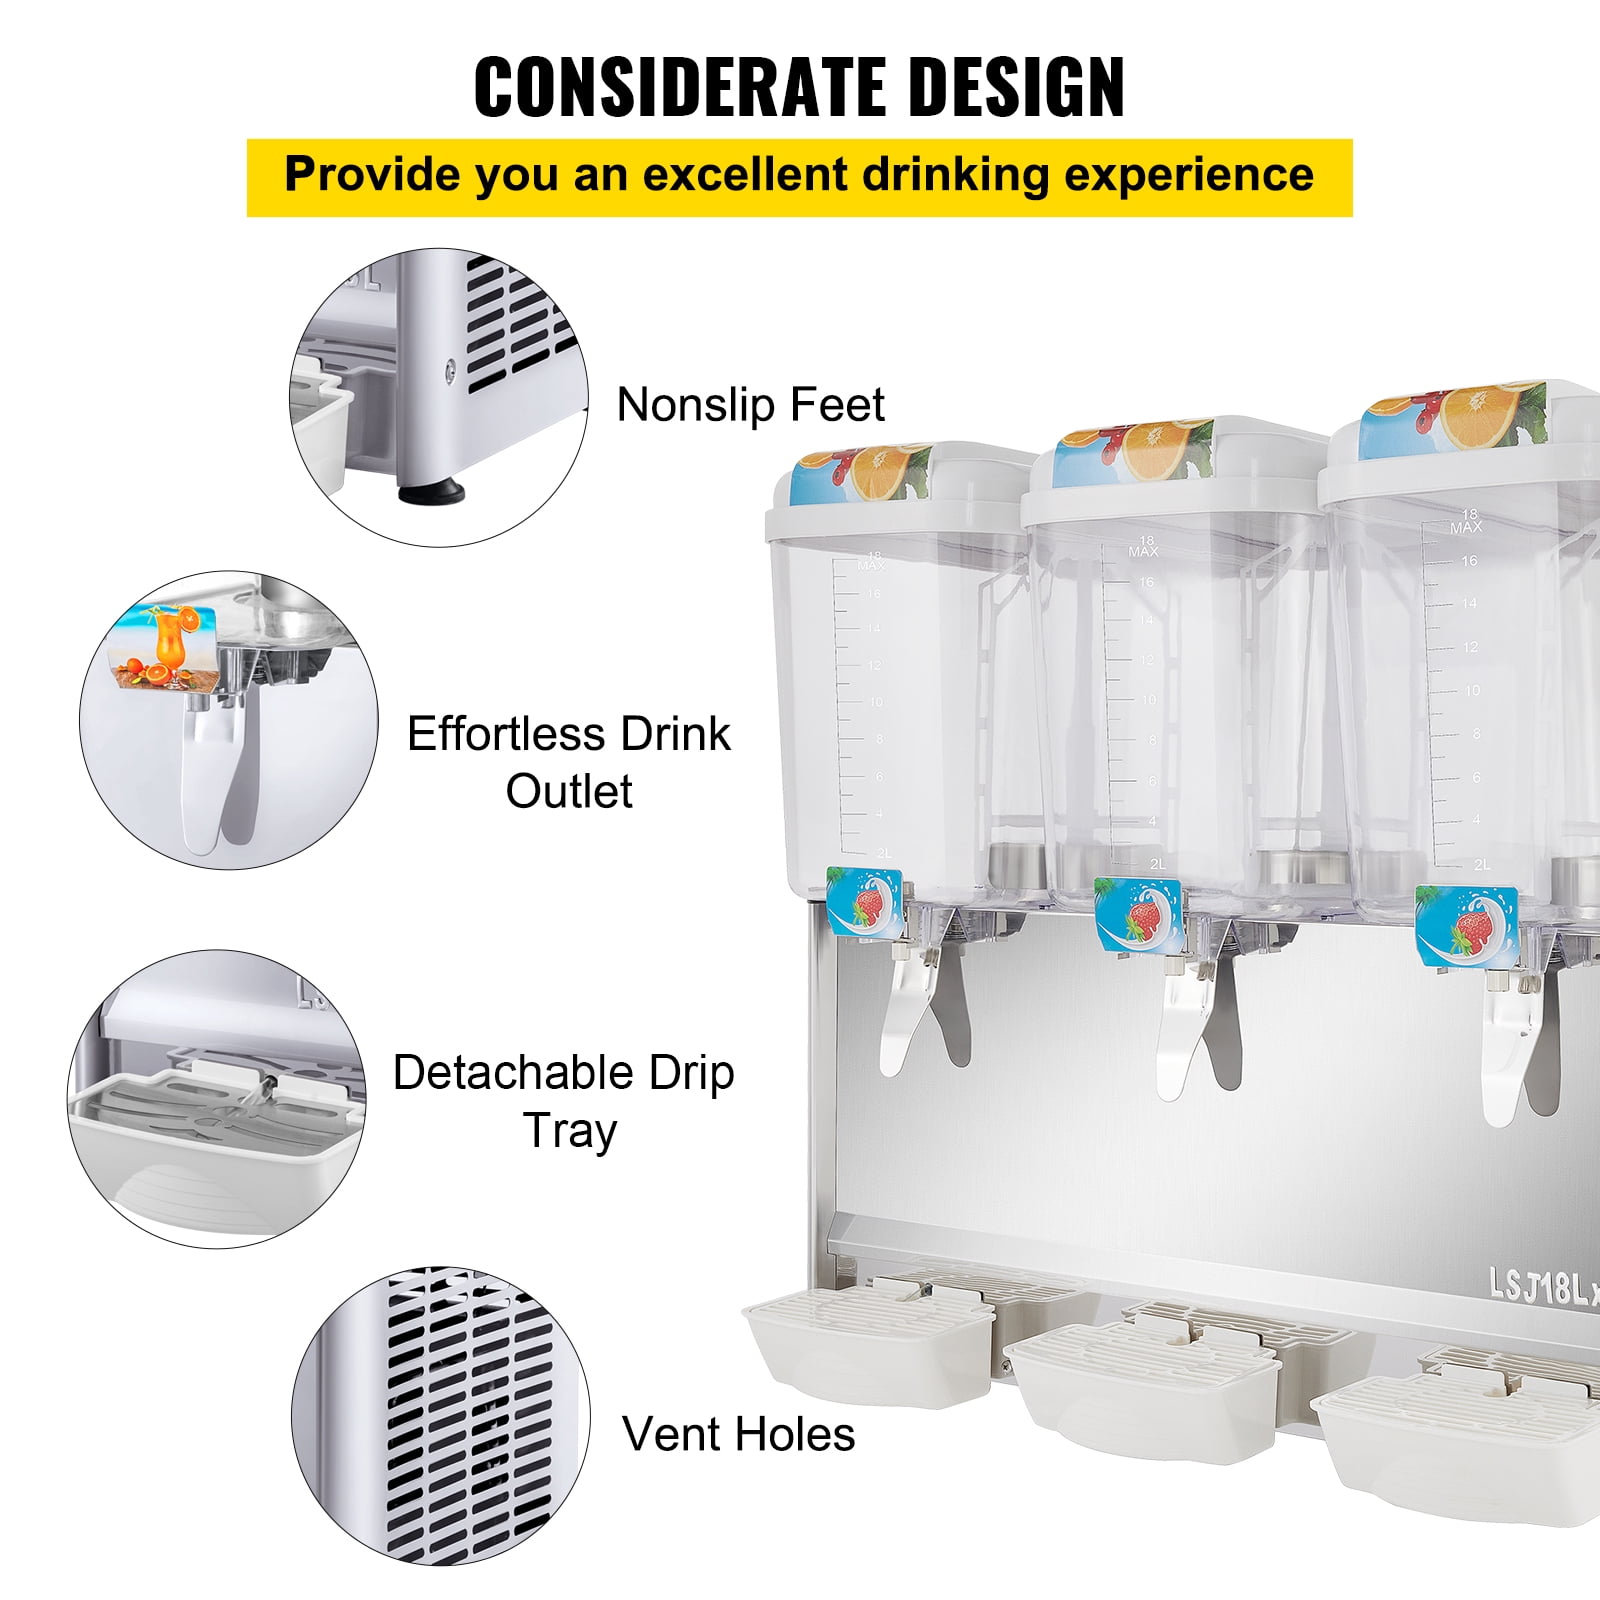 VEVOR Commercial Beverage Dispenser, 14.25 gal, 18L 3 Tanks Ice Tea Drink Machine, 680W 304 Stainless Steel Juice Dispenser with 41°F-53.6°F